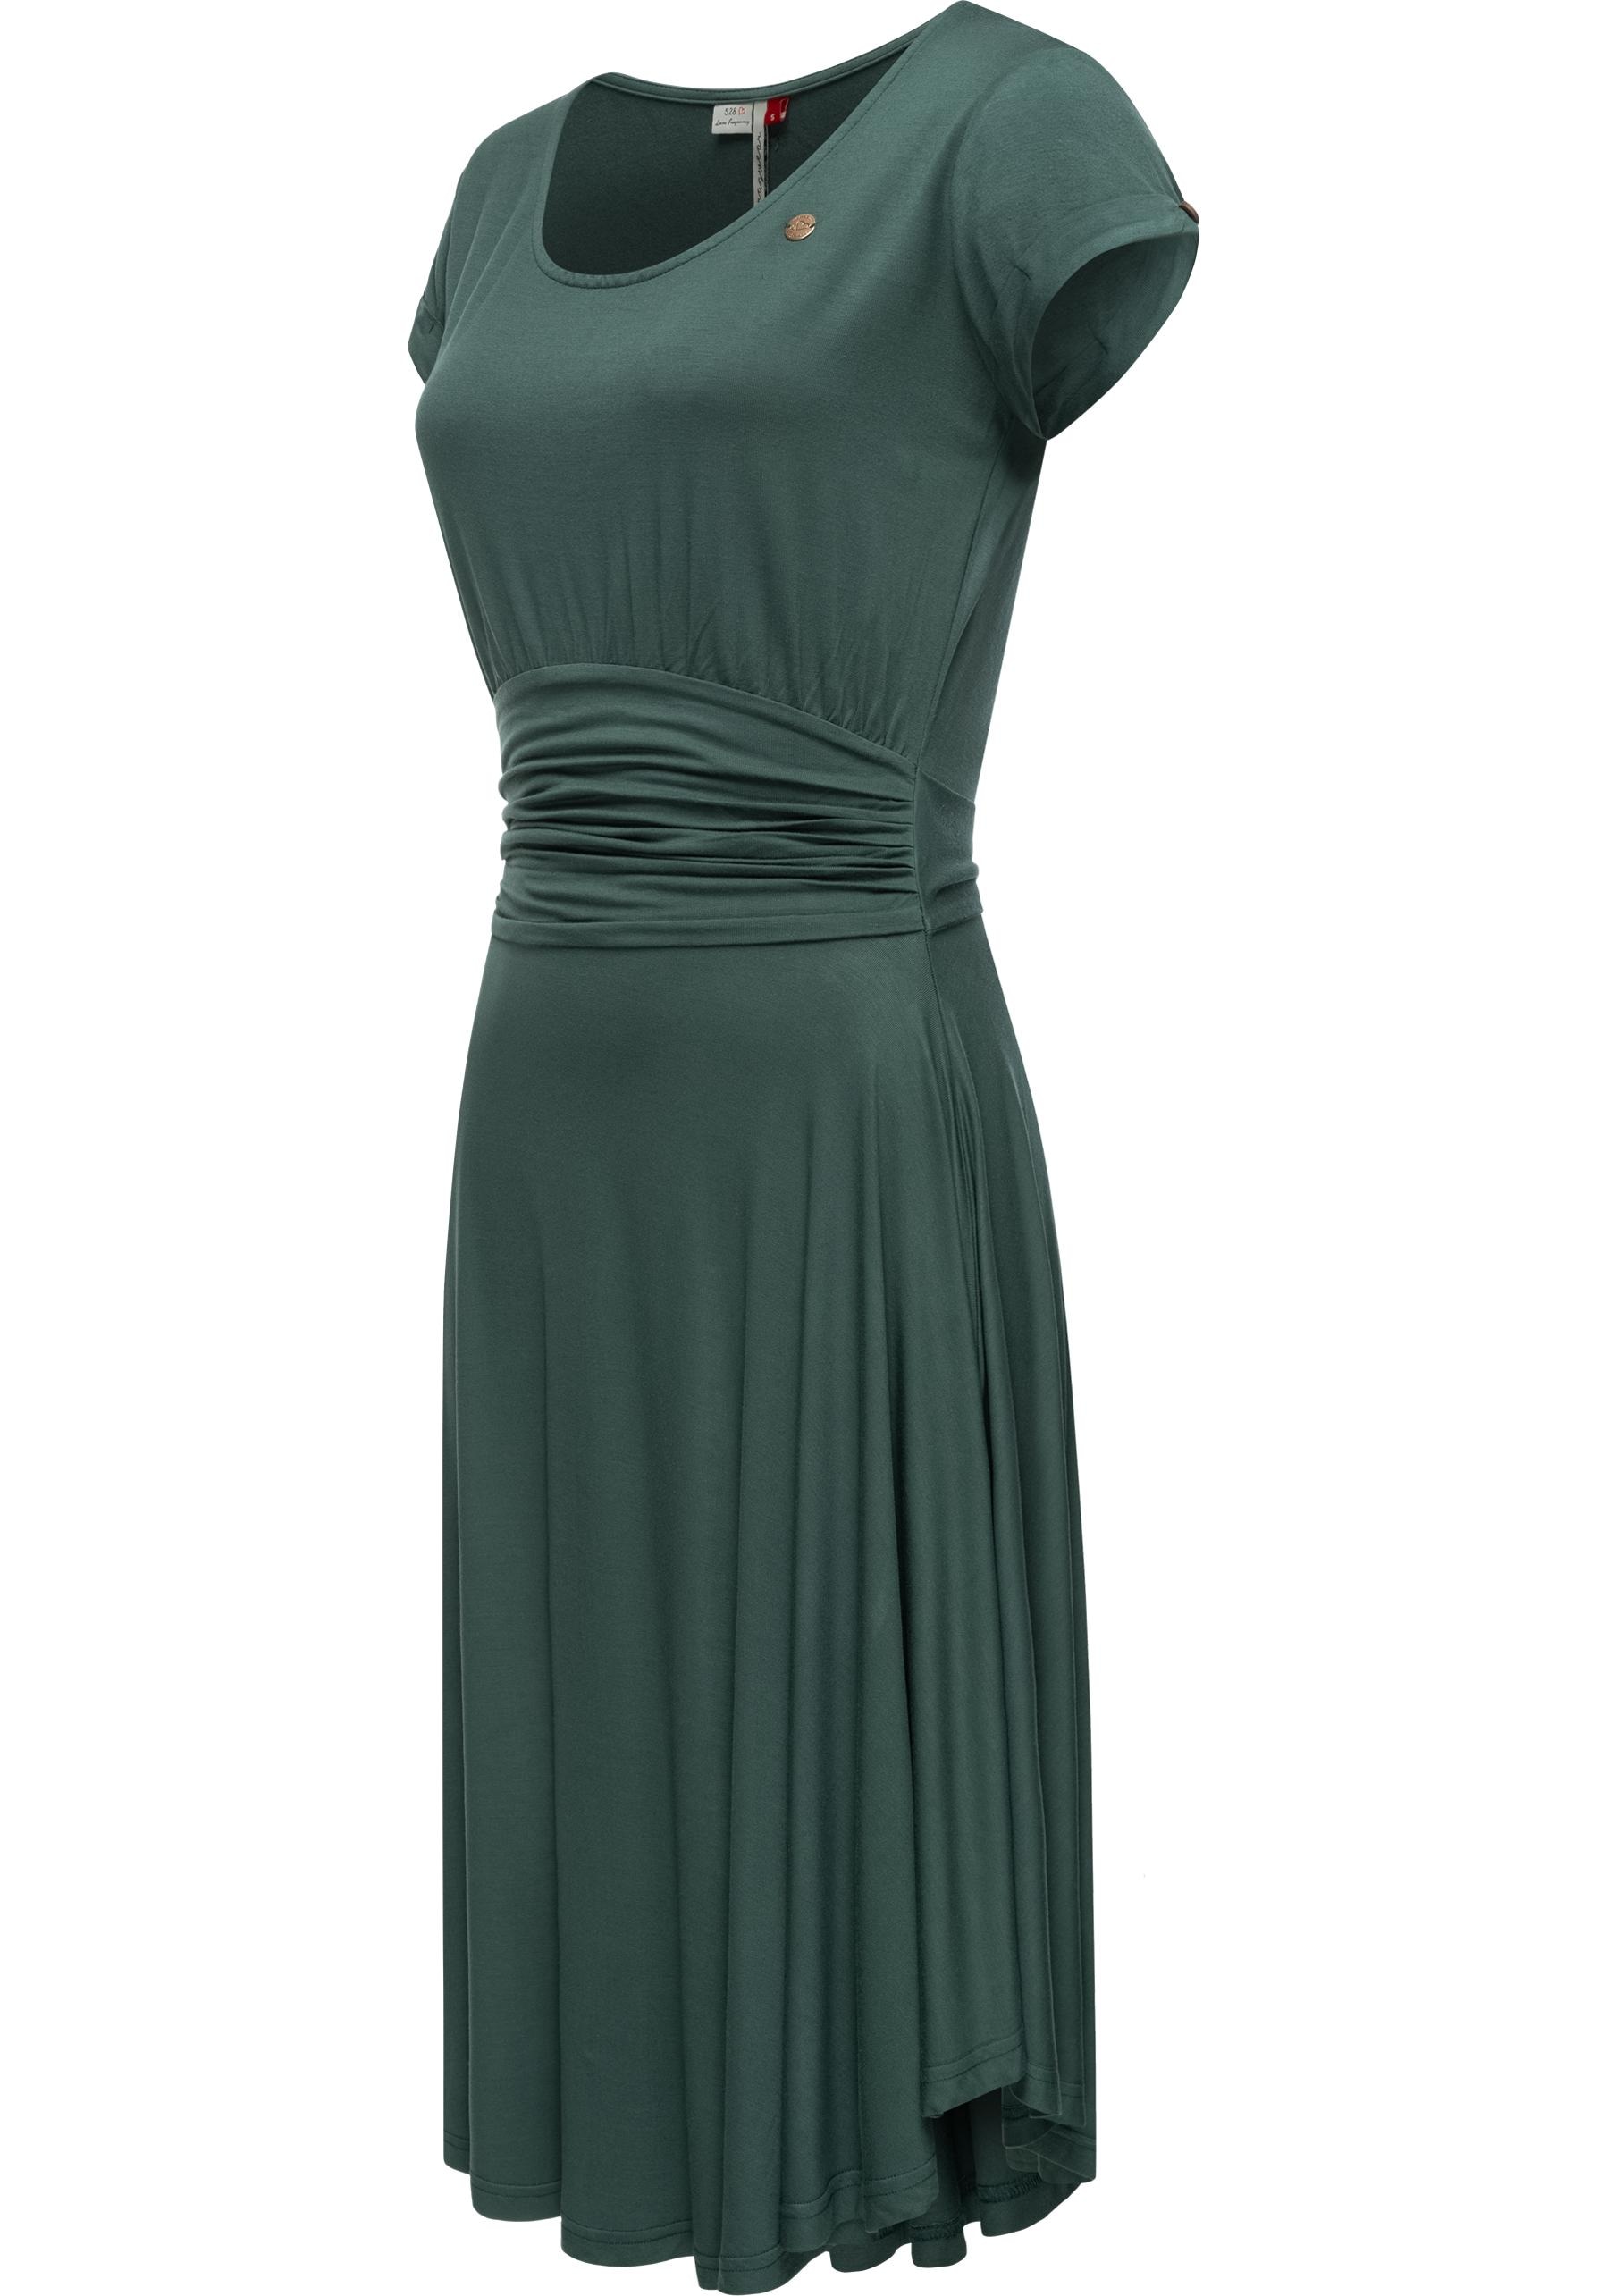 Ragwear Sommerkleid »Ivone Solid«, leichtes Jersey-Kleid in melierter Optik